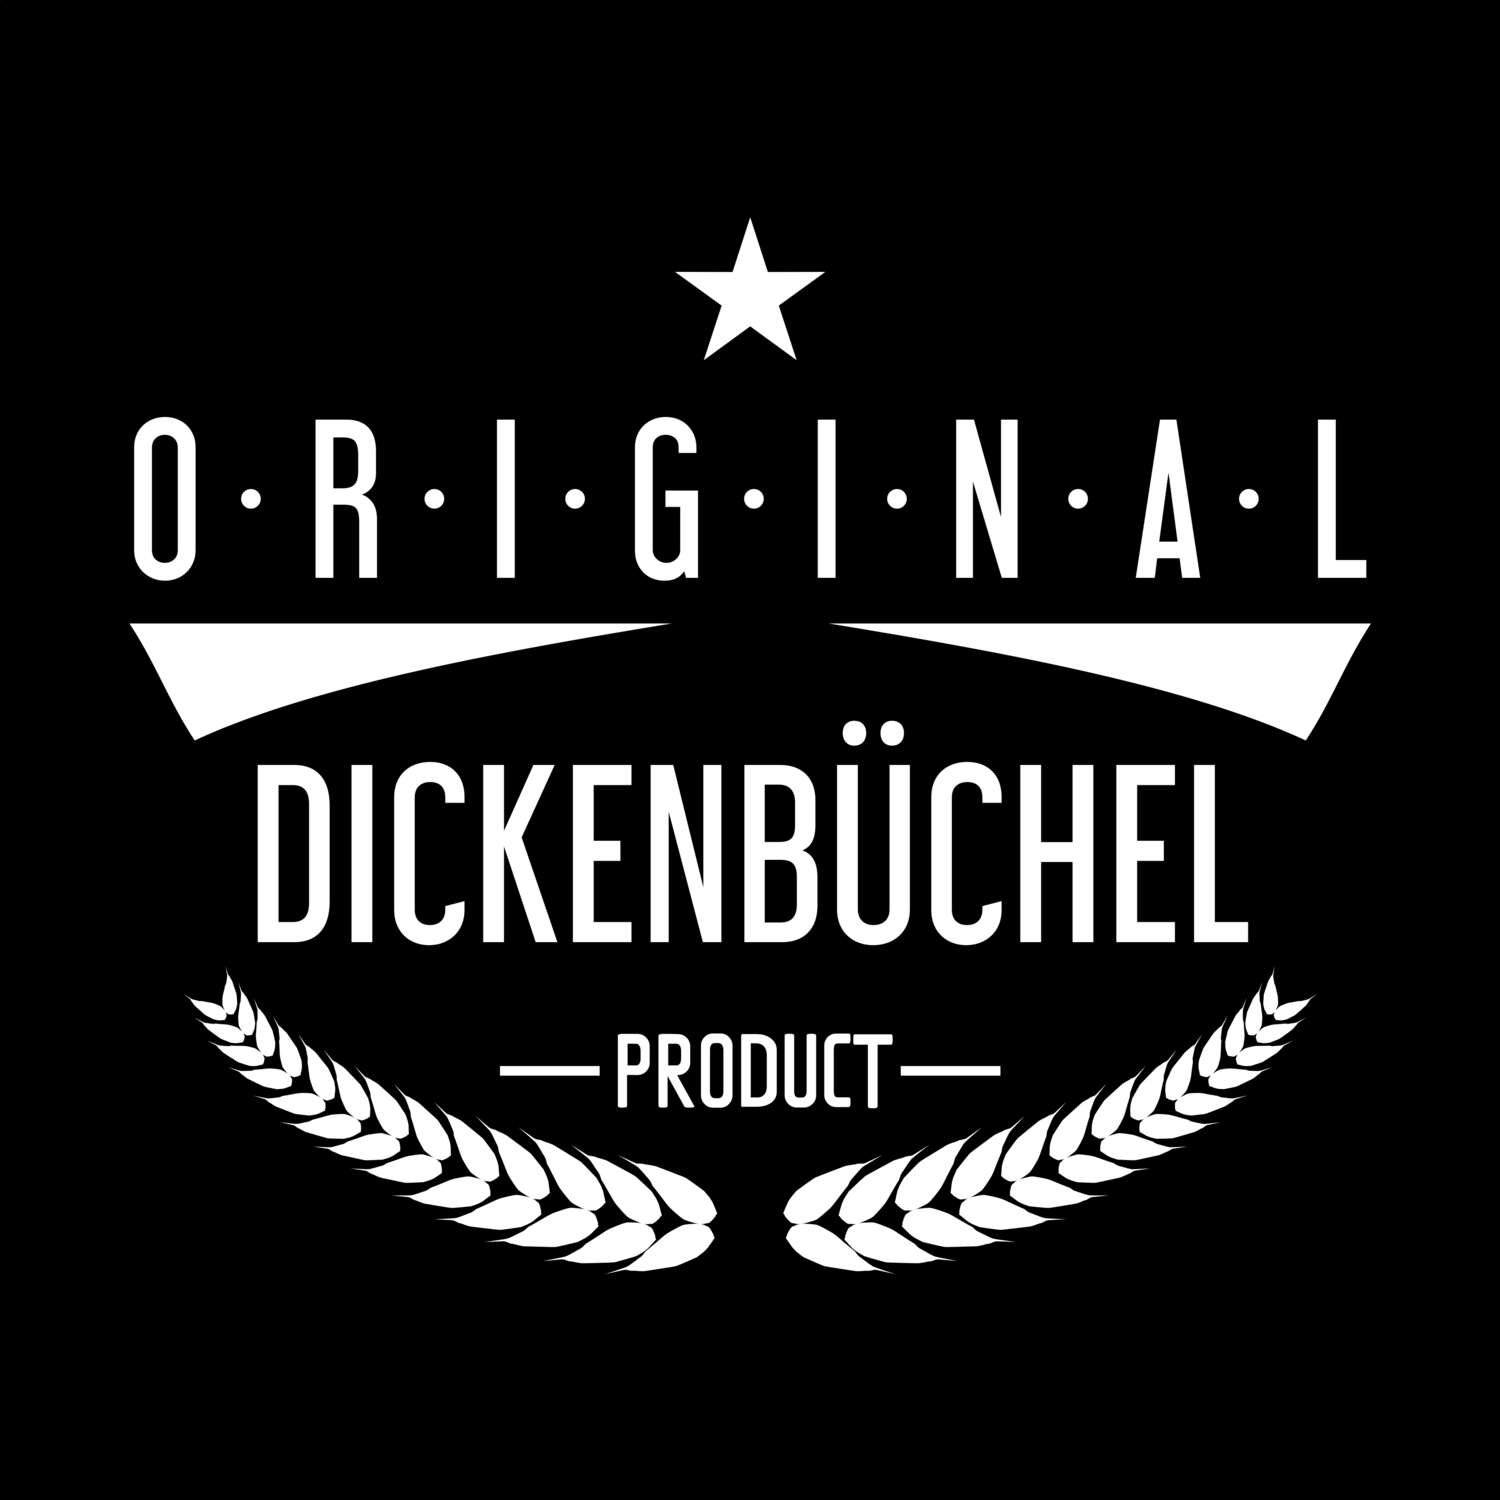 Dickenbüchel T-Shirt »Original Product«